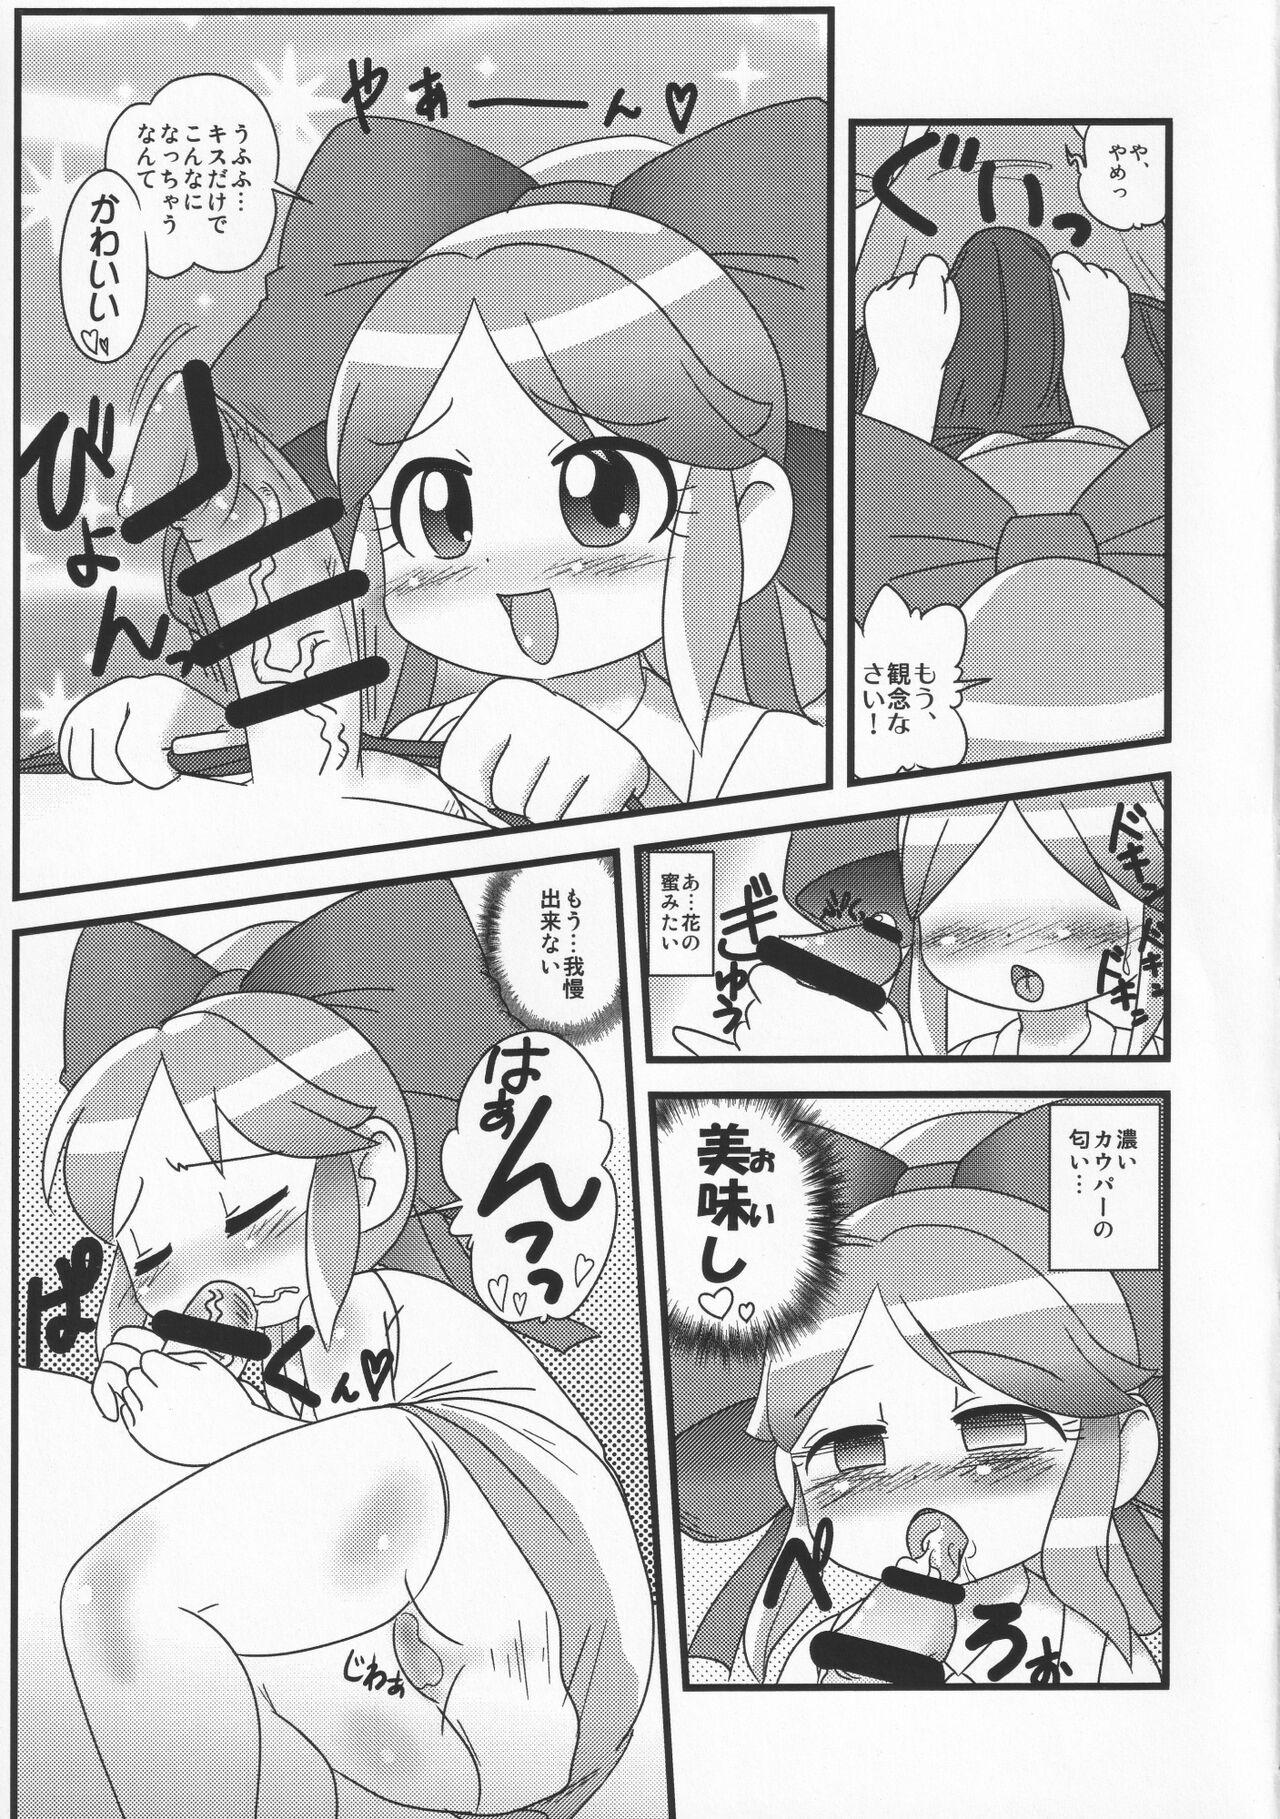 Jap Taose!! Kimari-chan - Battle spirits Camsex - Page 4